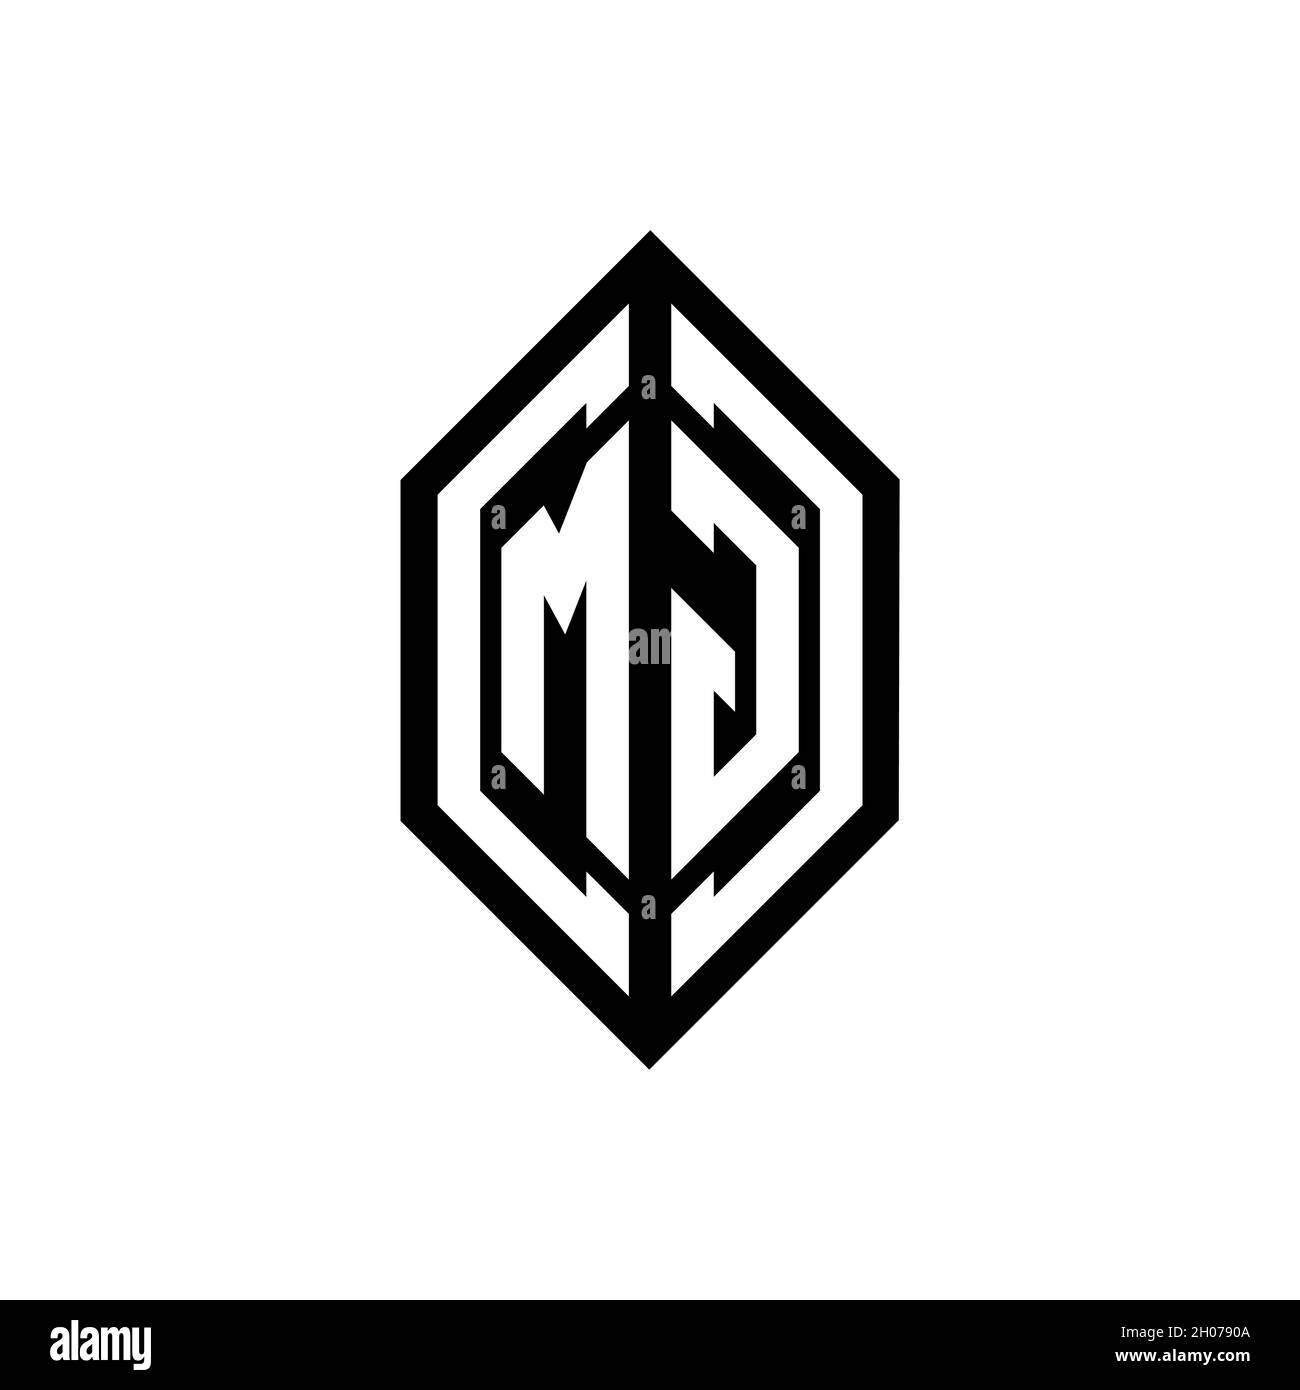 Mg logo monogram with emblem shield shape design Vector Image